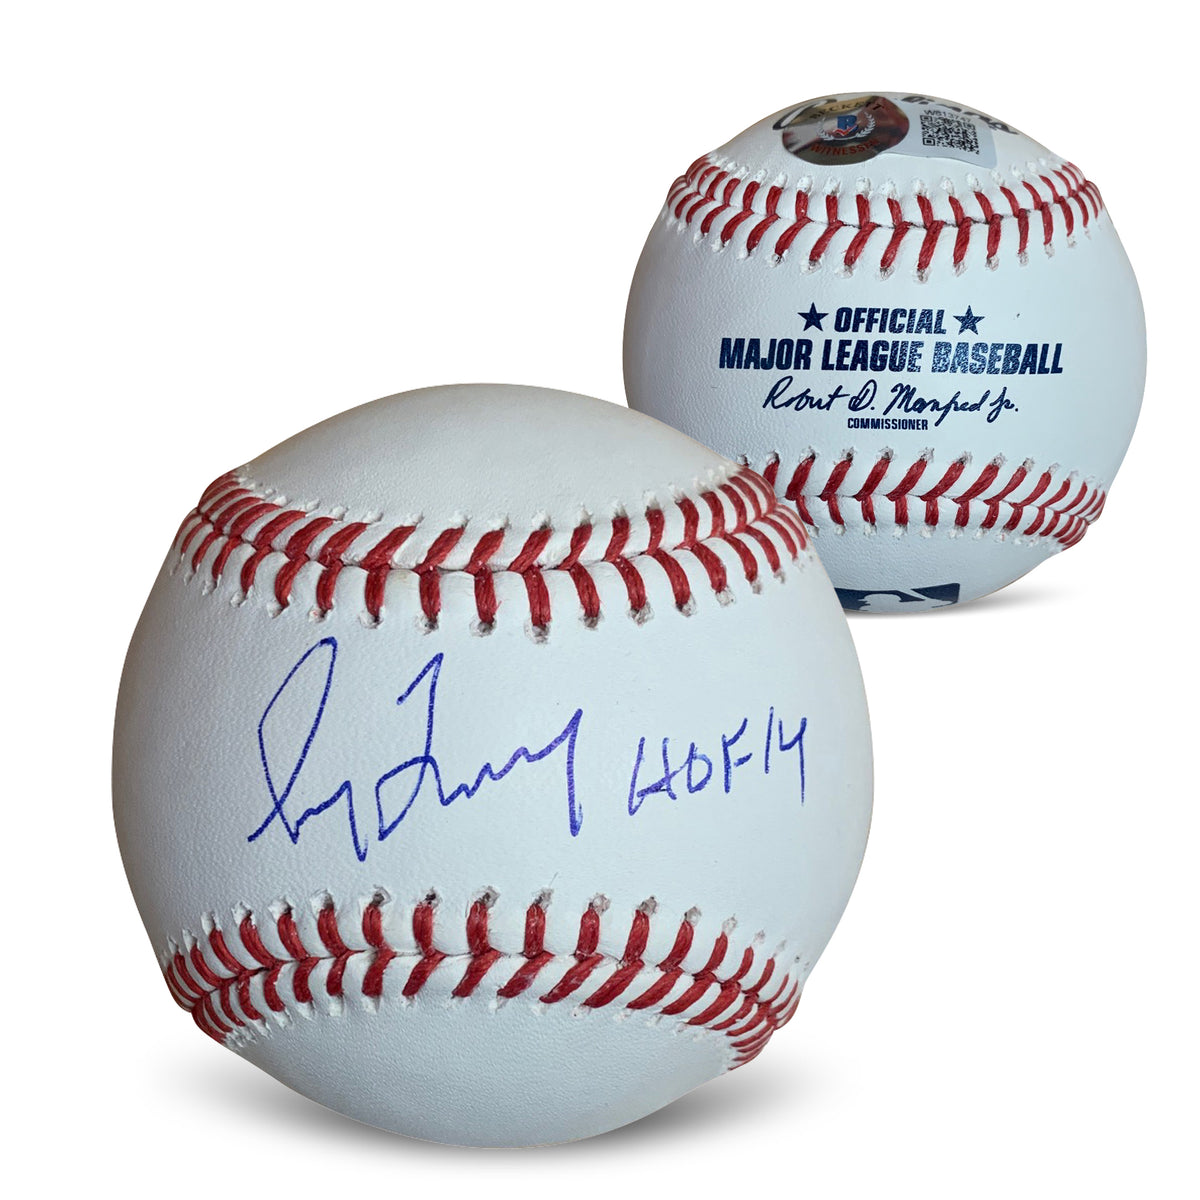 Man, I want a Greg Maddux Signature Series card sooooo bad : r/MLBTheShow